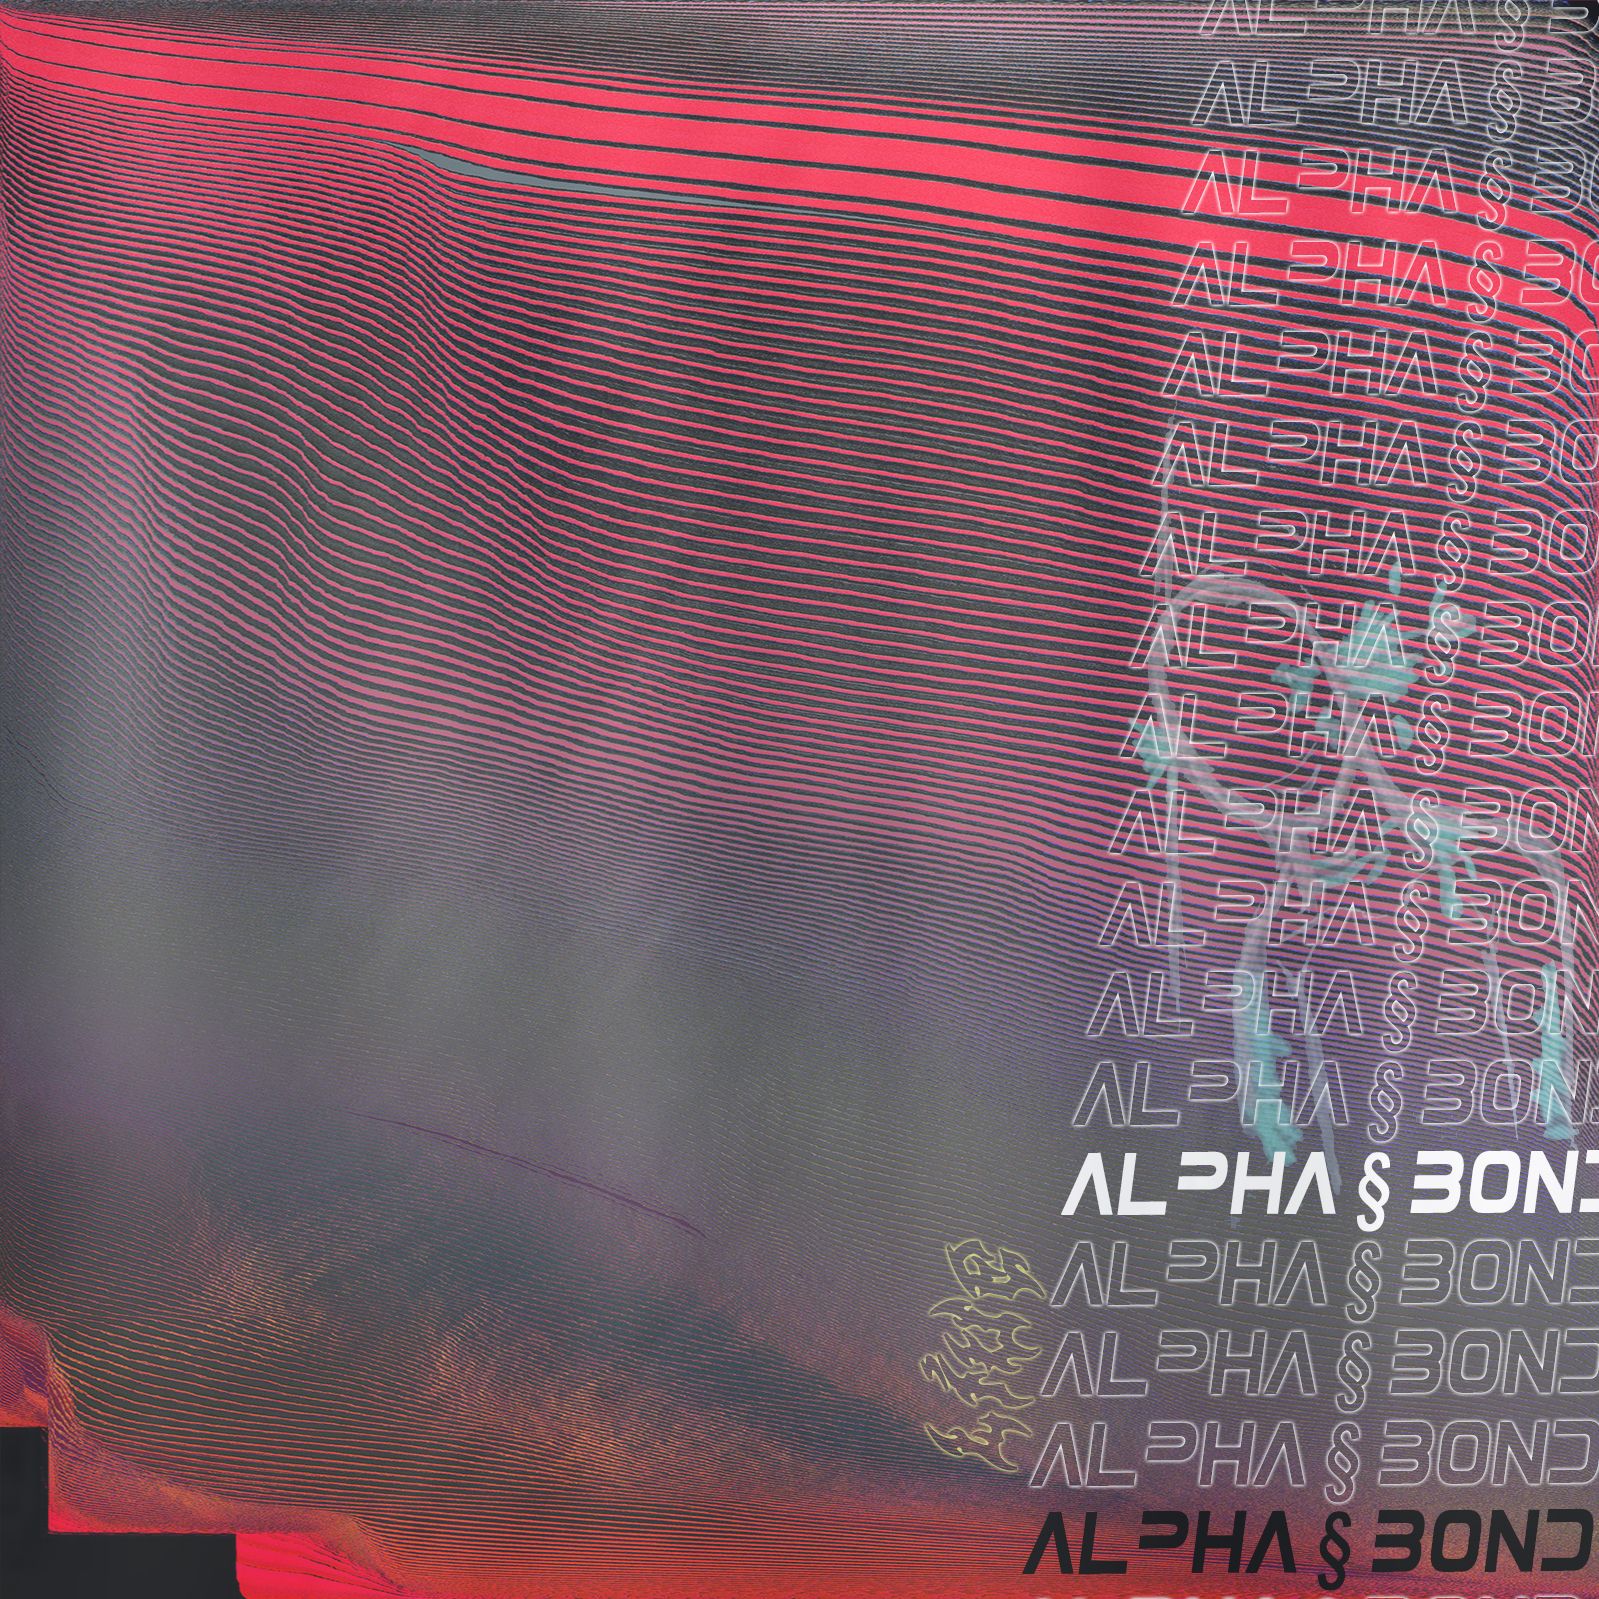 Landa alpha § bond